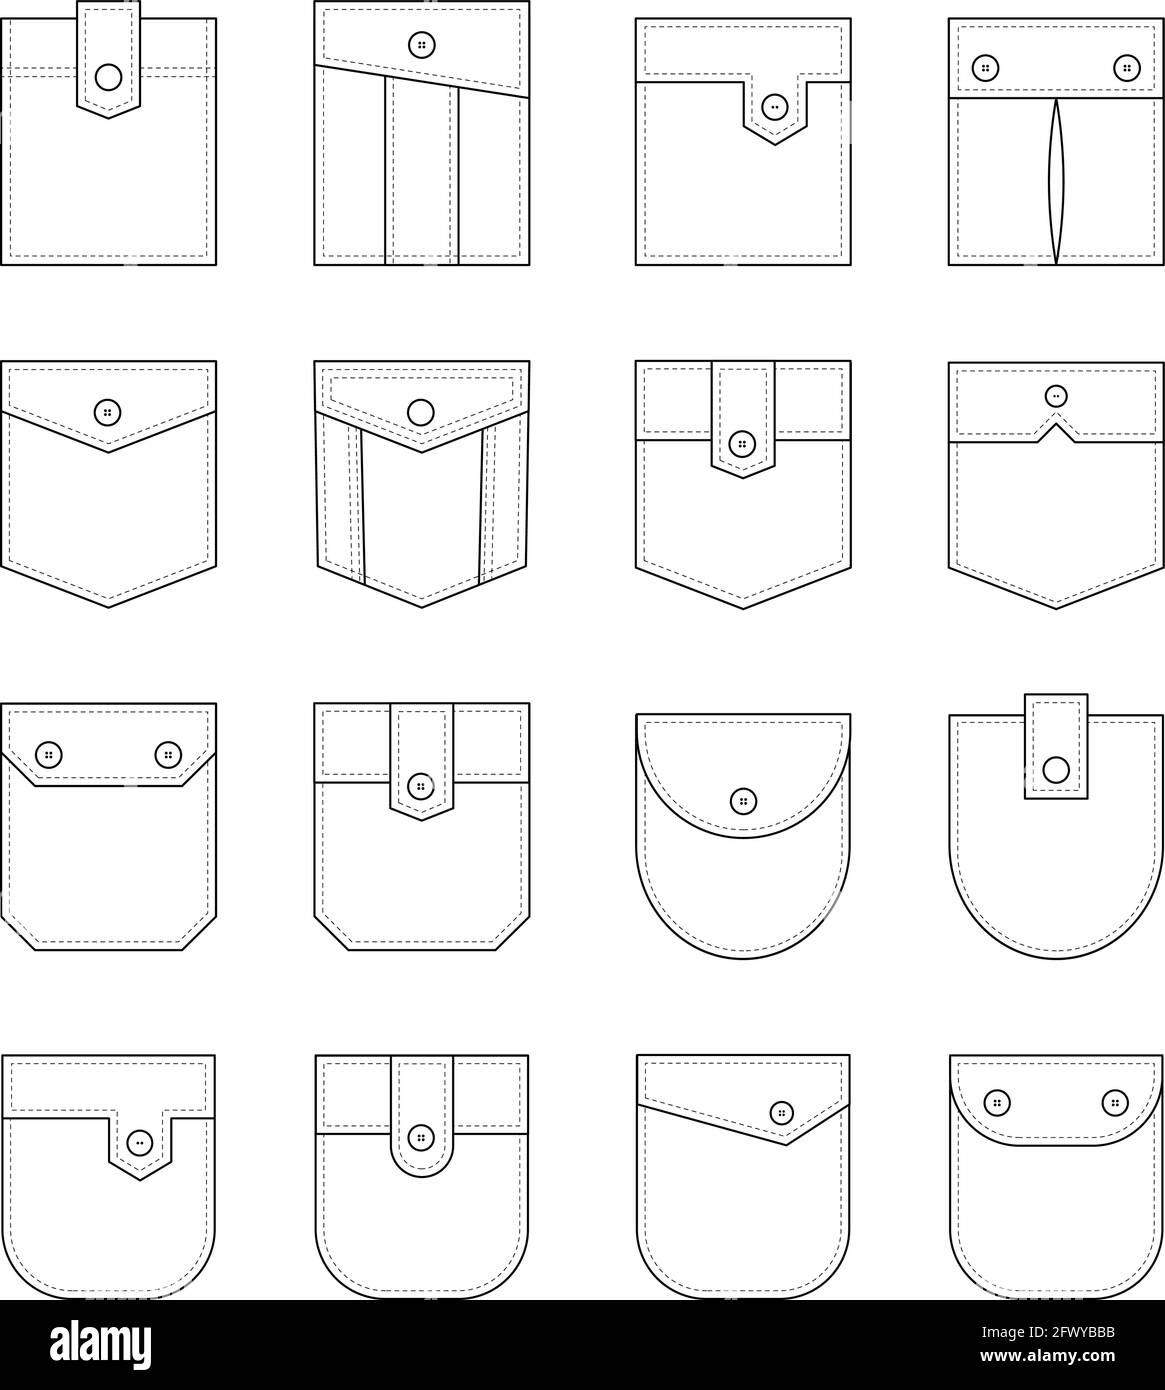 Patch pocket. Set of uniform patch pockets shapes for clothes